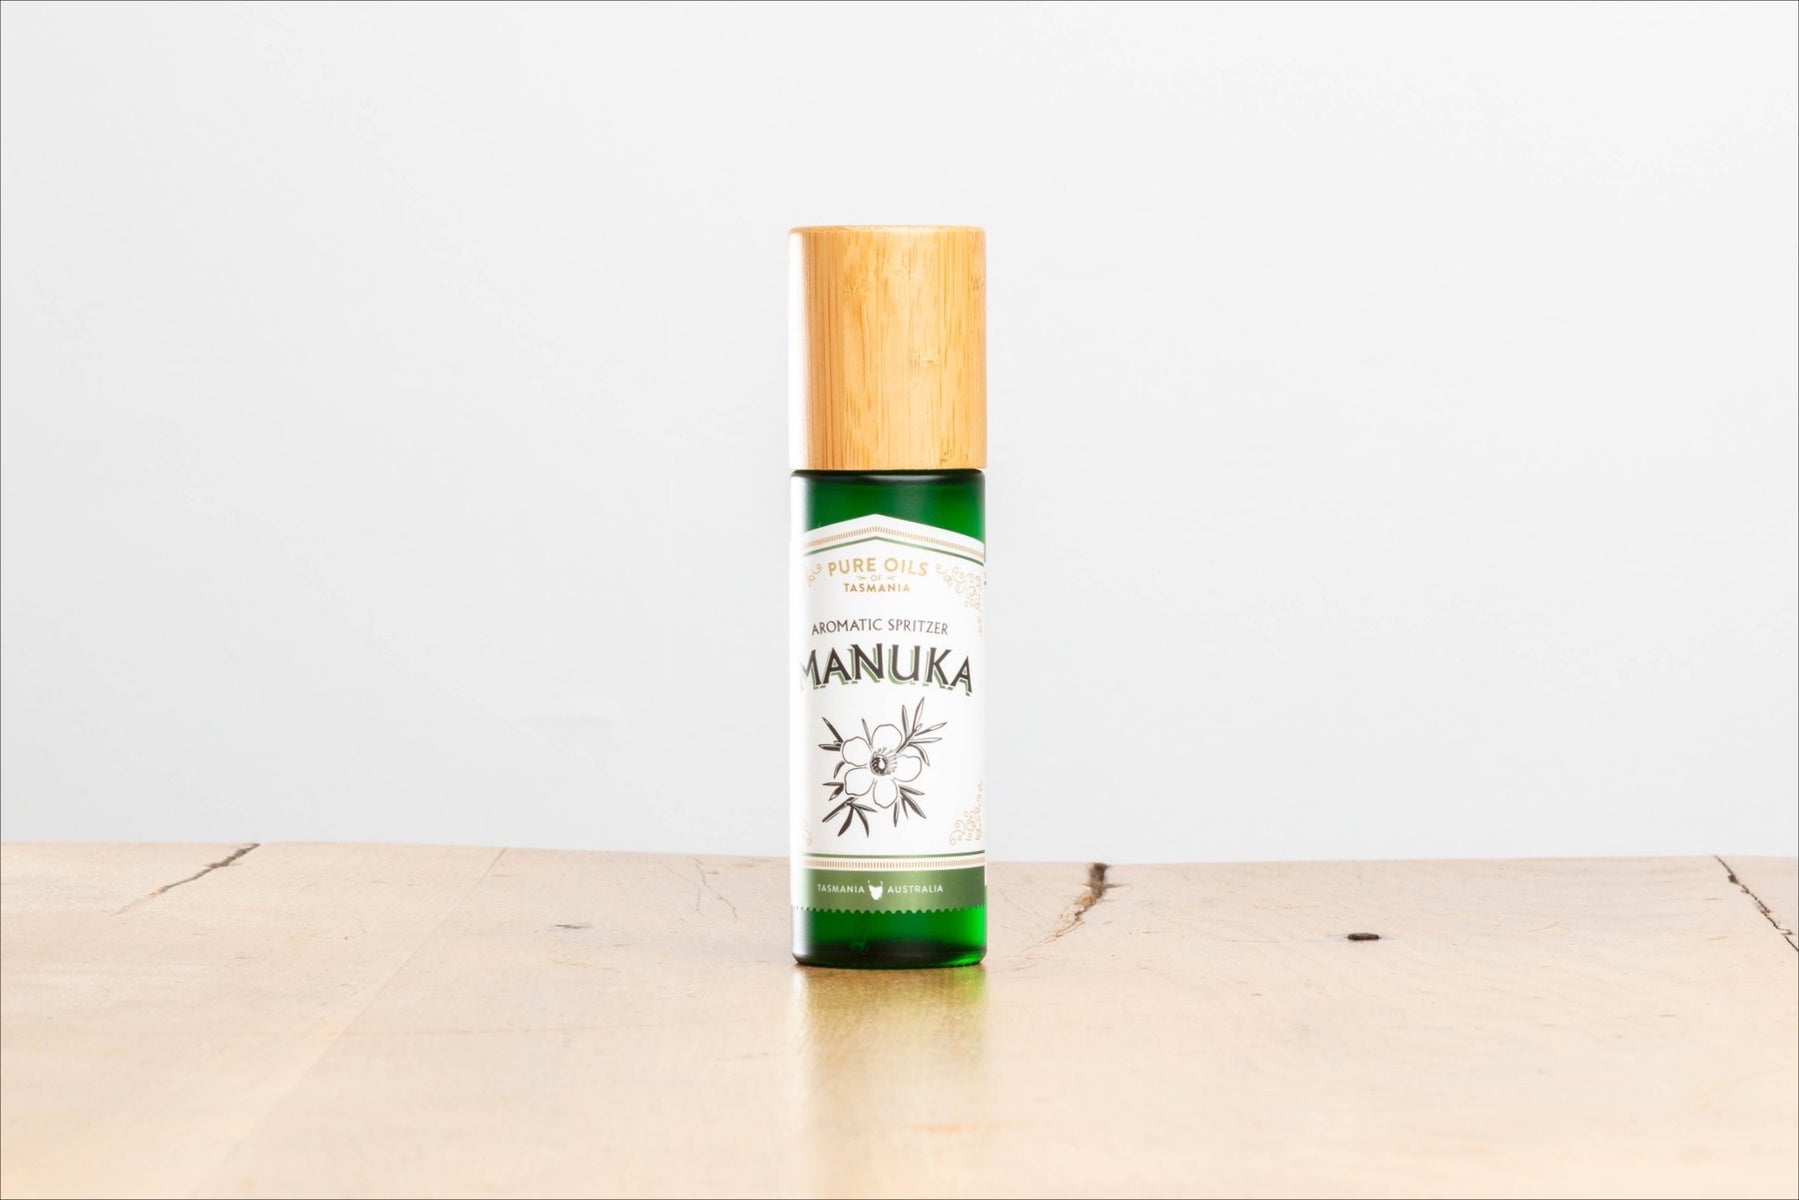 Manuka Aromatic Spritzer - Pure Oils of Tasmania Body pure oils tasmania 